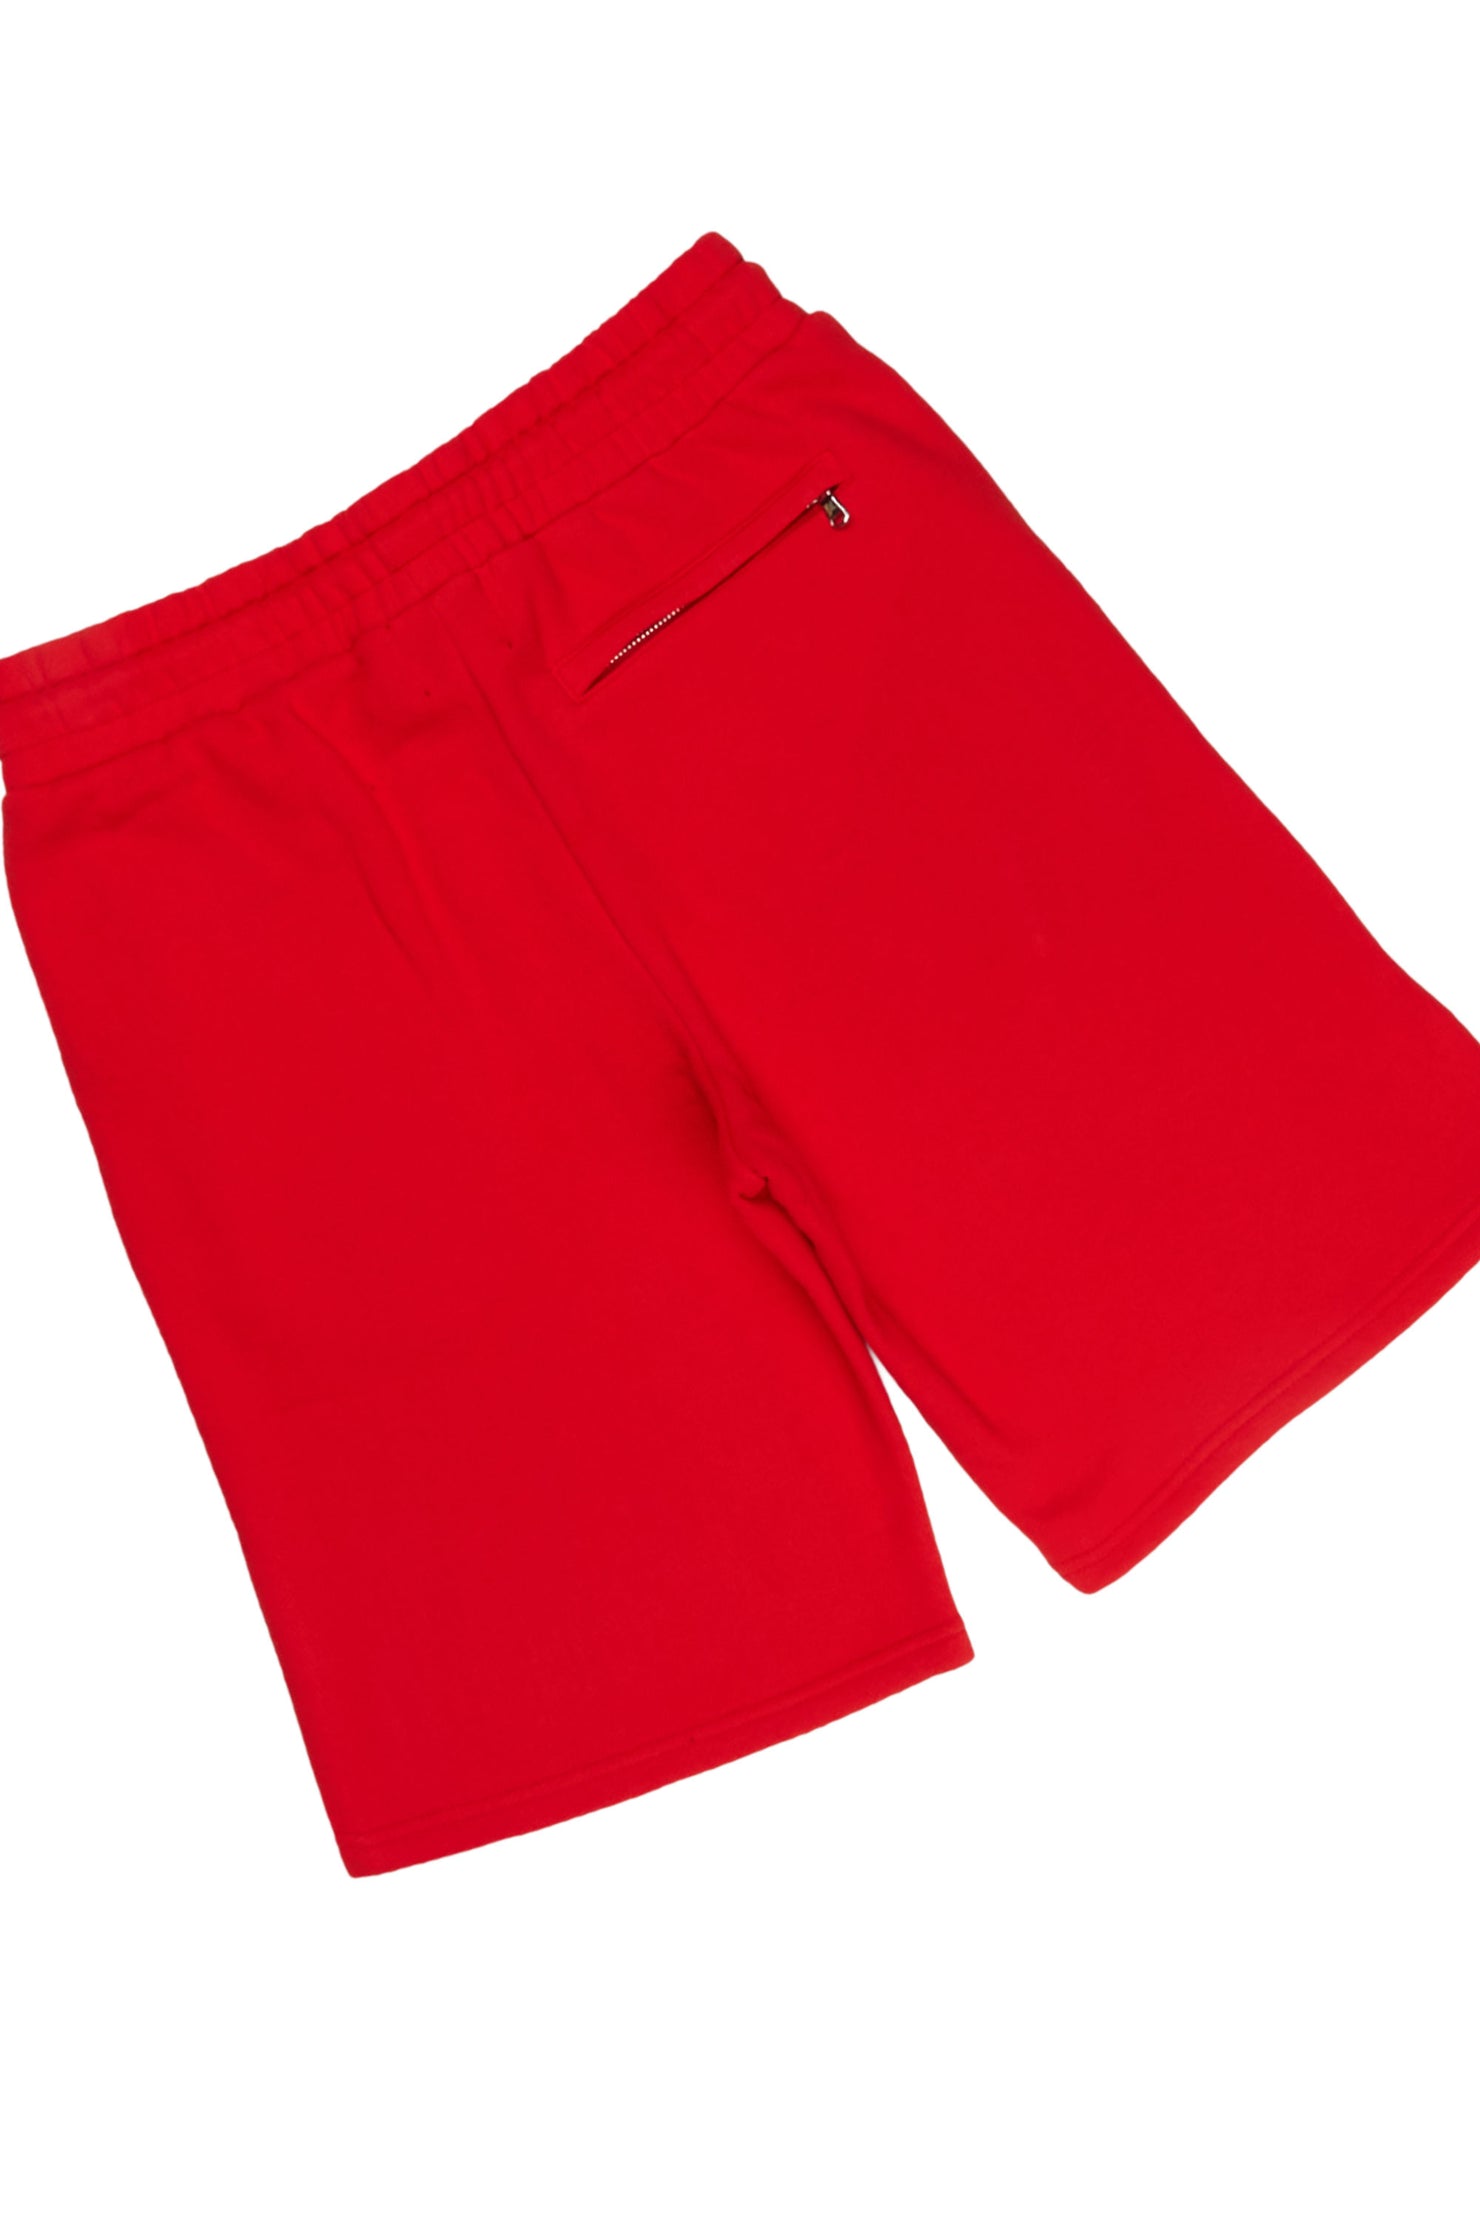 Rockstar Casey Red T-Shirt/Short Set